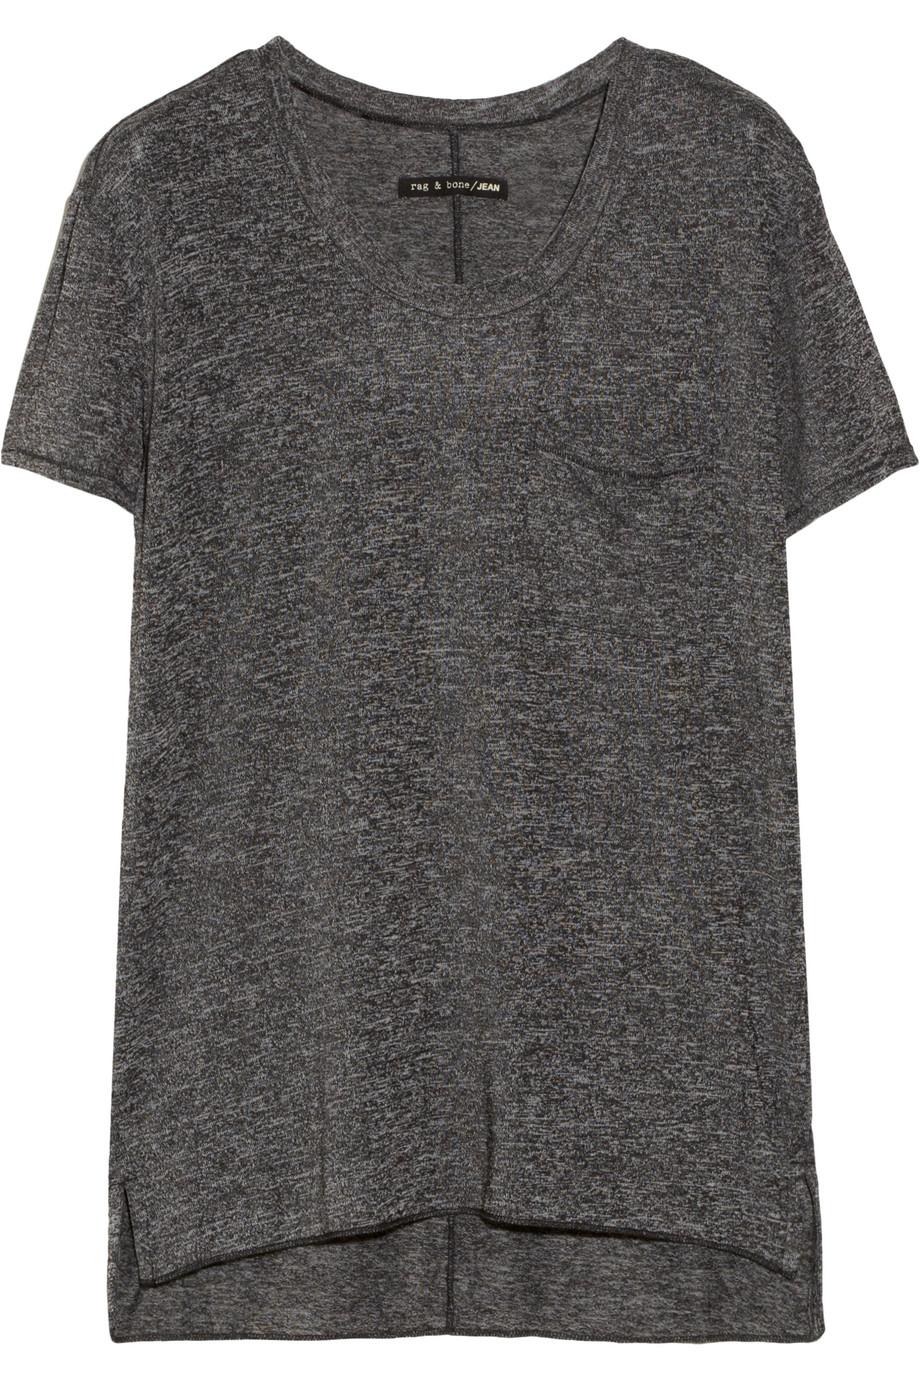 Rag & Bone The Pocket Tee Jersey T-shirt | ModeSens